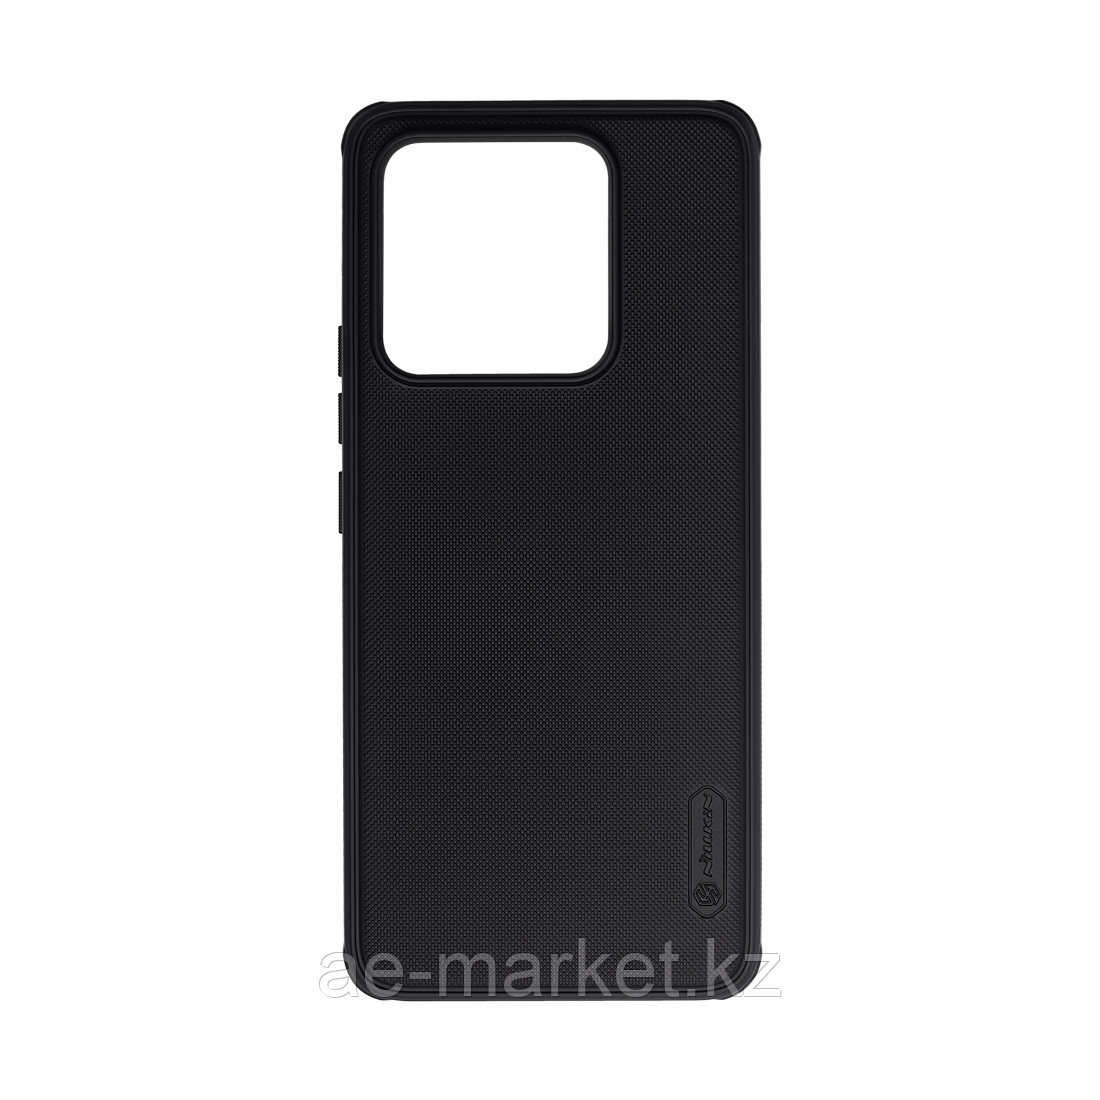 Чехол для телефона NILLKIN для Xiaomi 13 Pro SFS-09 Super Frosted Shield Чёрный, фото 1